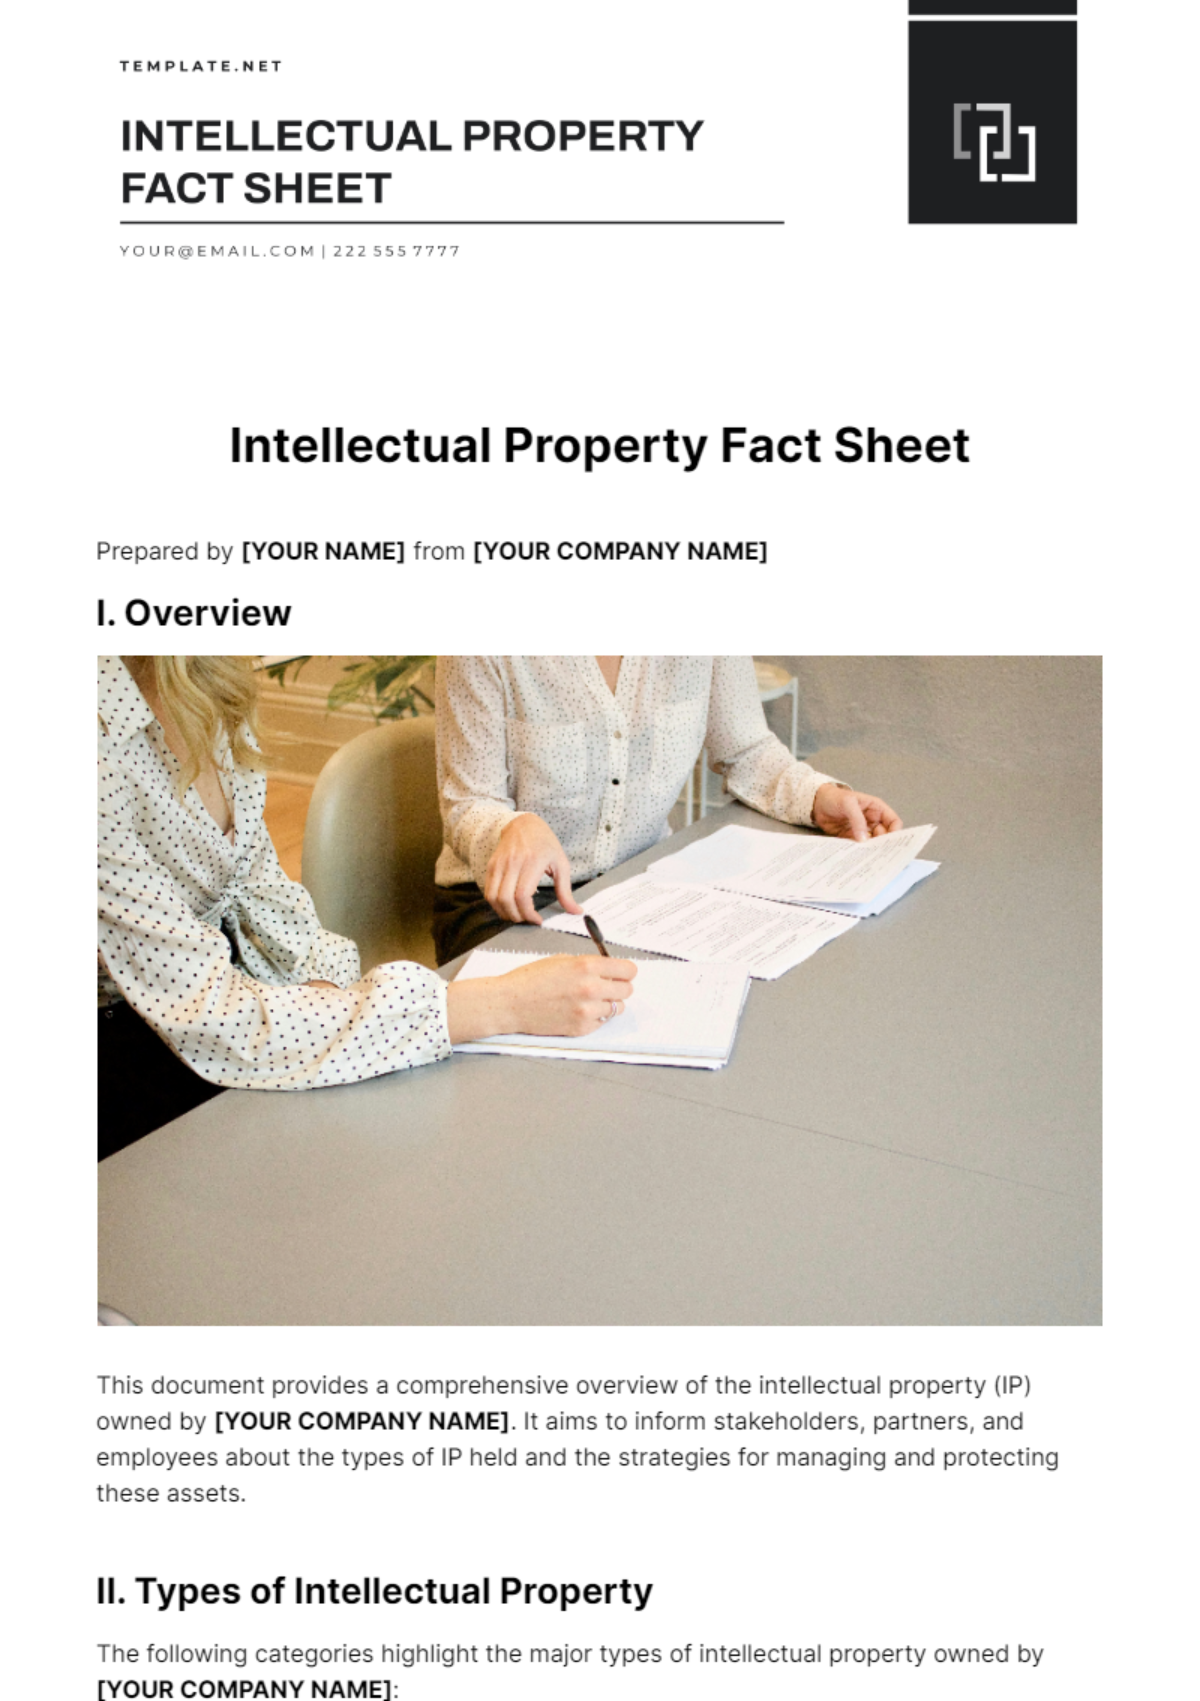 Intellectual Property Fact Sheet Template